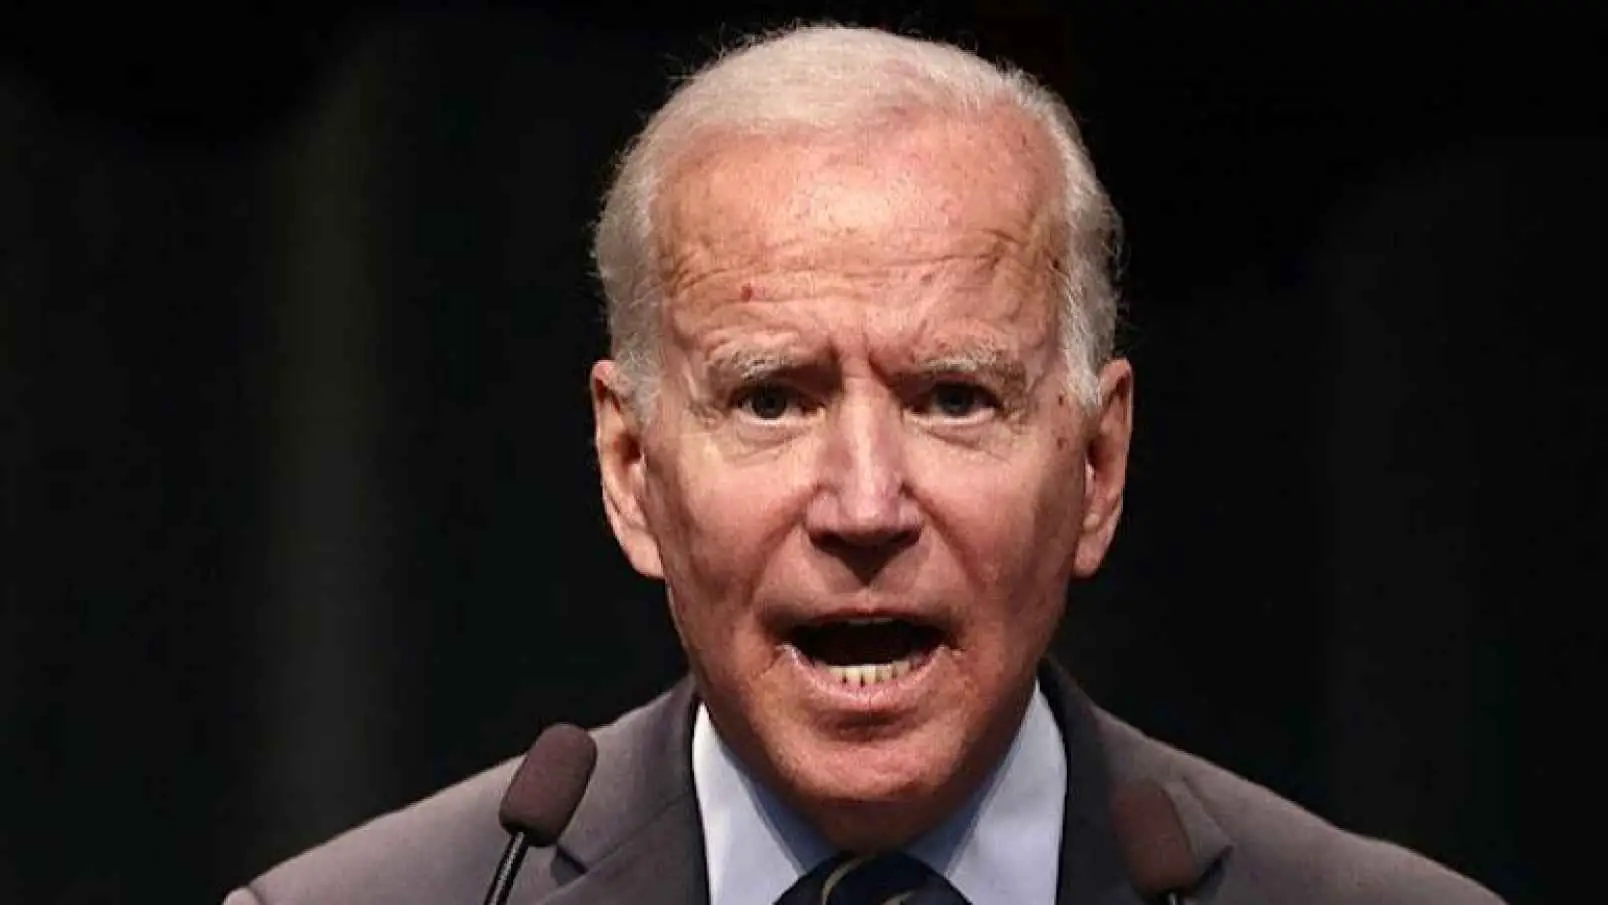 The Coronavirus: What Would Joe Biden Do?